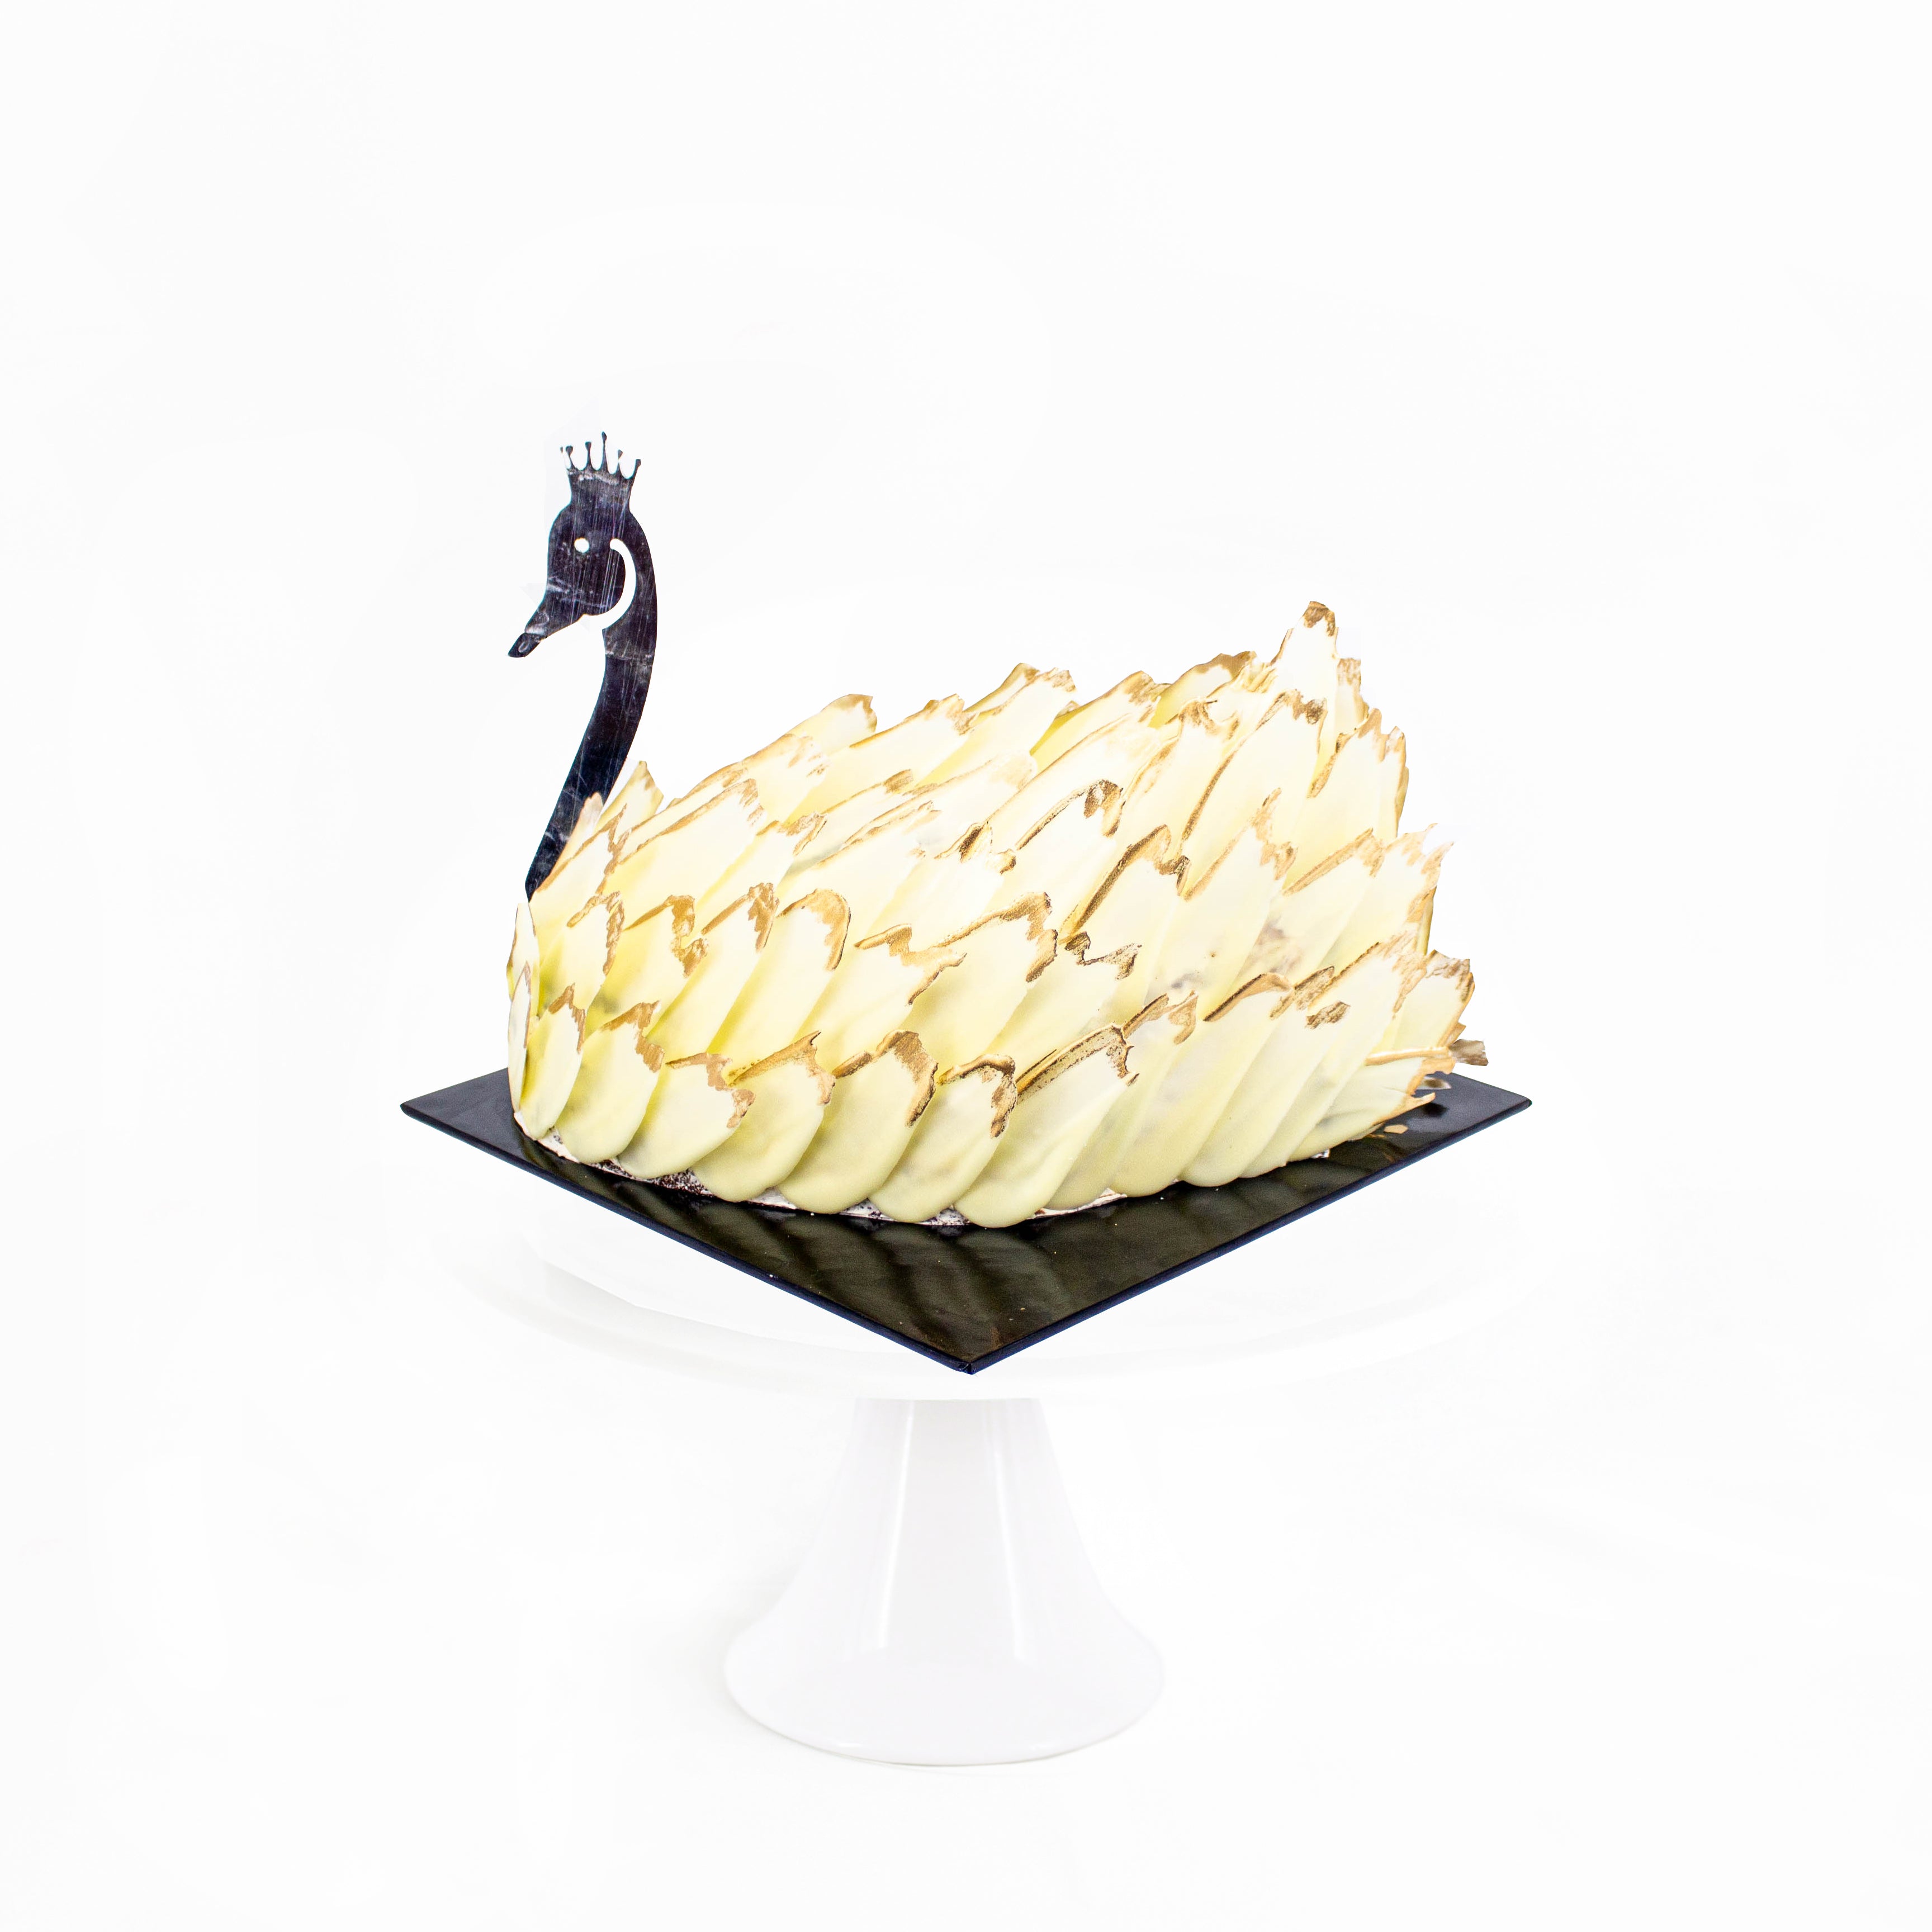 Swan cake by Toni seery | Novelty cakes, Birthday cupcakes decoration,  Animal cakes